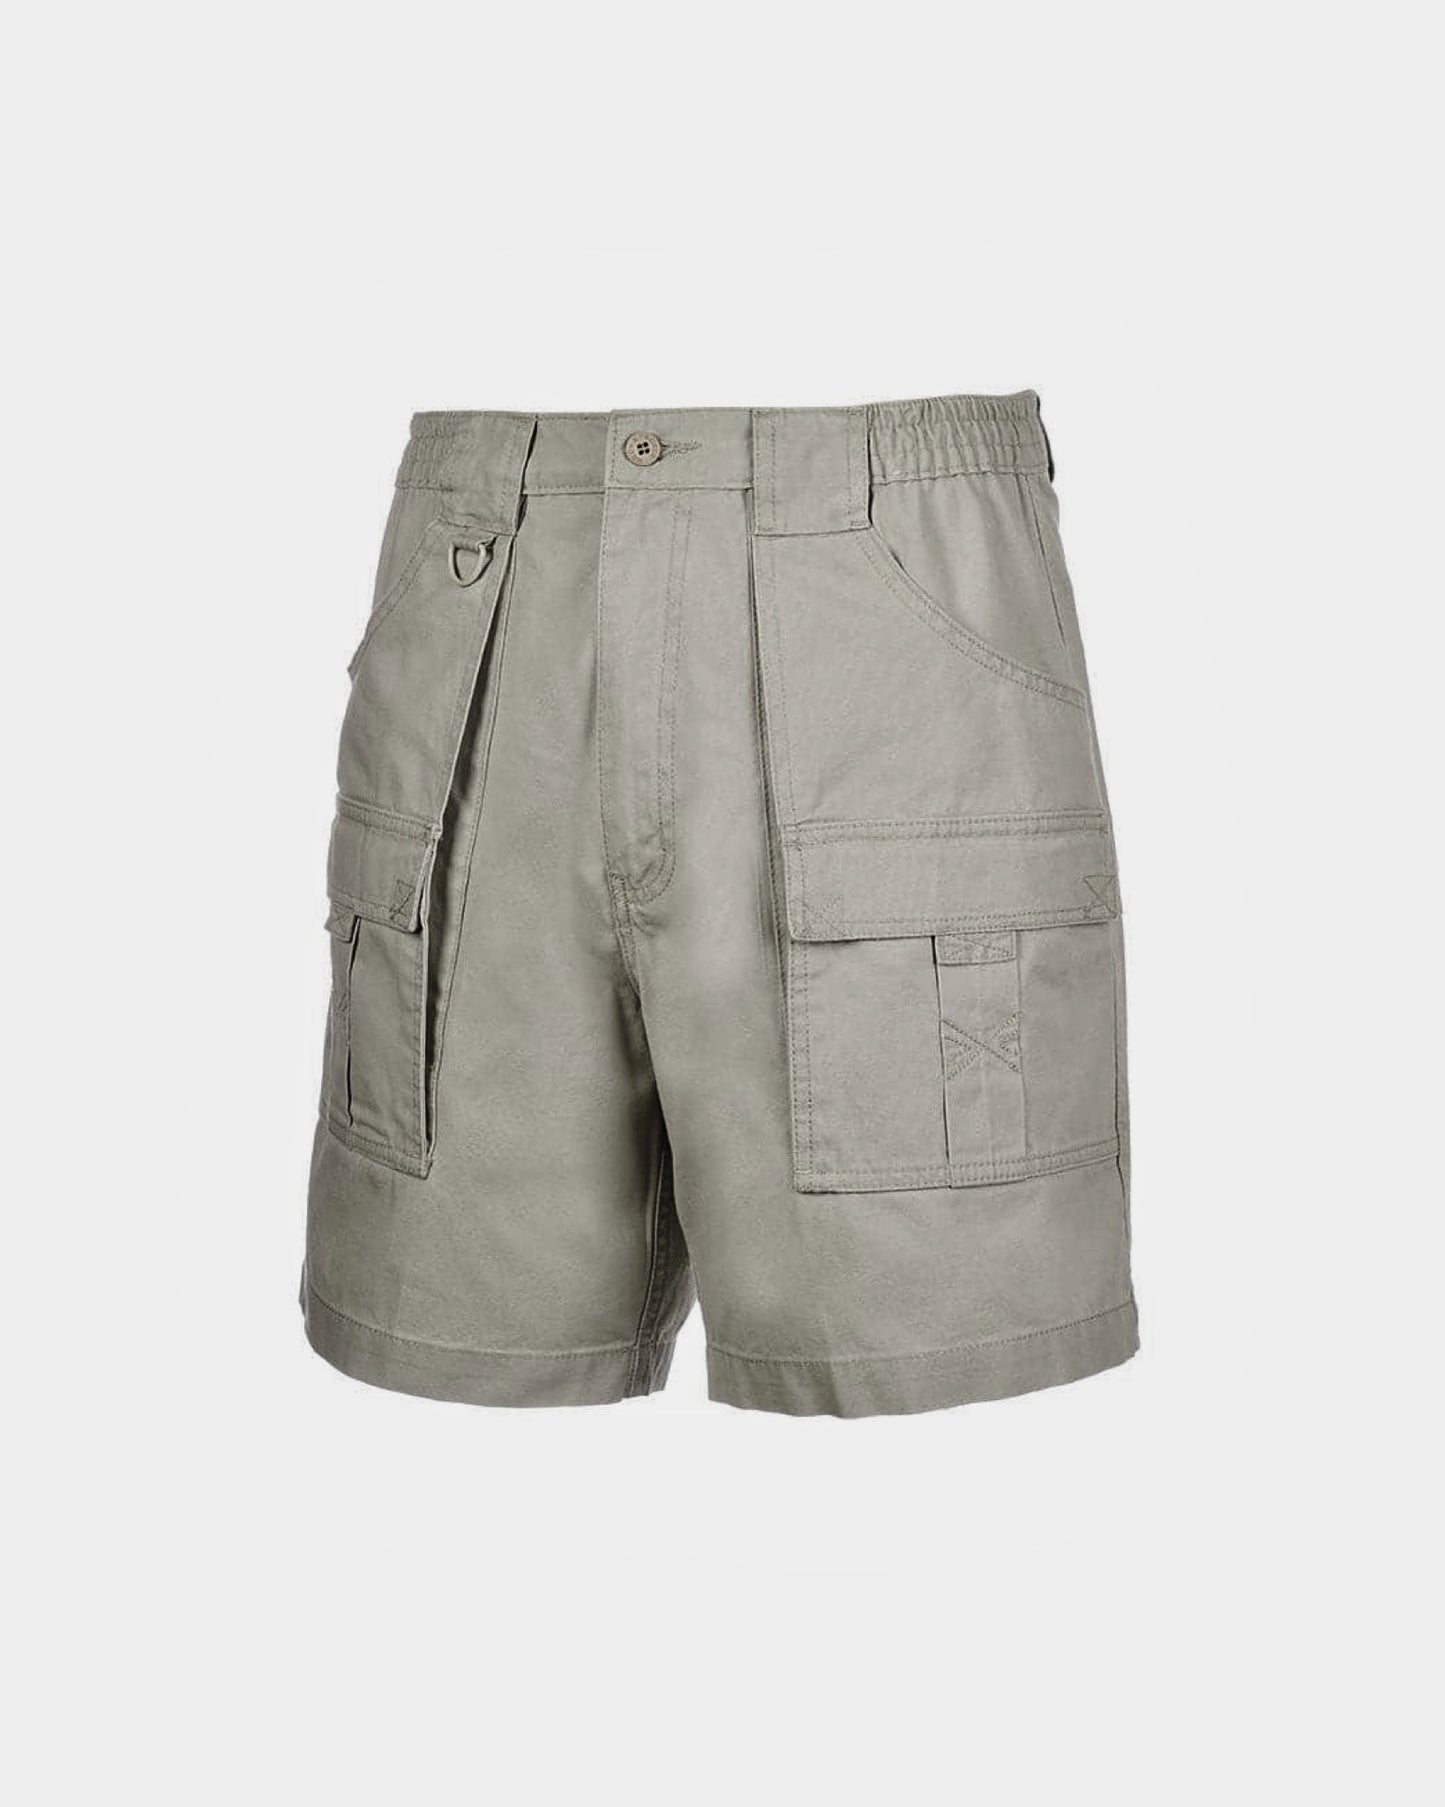 Hook &tackle cargo shorts in khaki